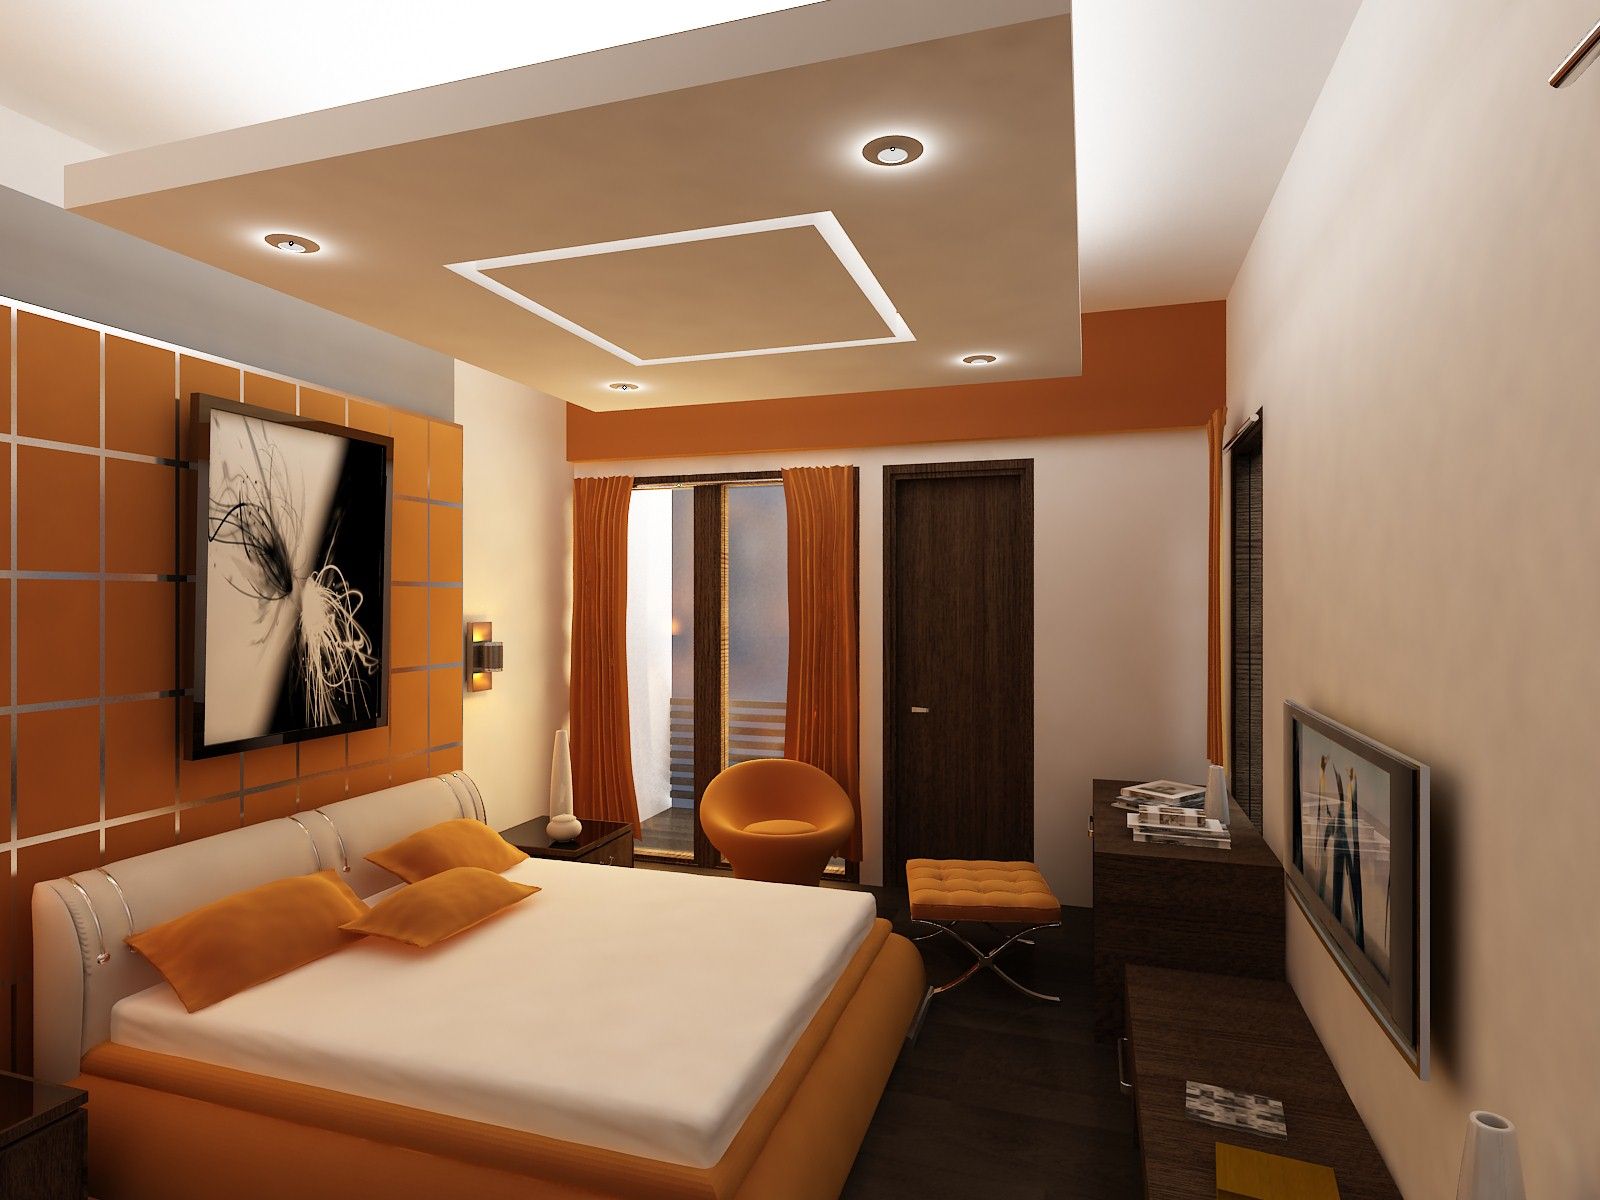 69 Kumpulan Desain Interior Kamar Tidur Rumah Minimalis Istimewa Banget